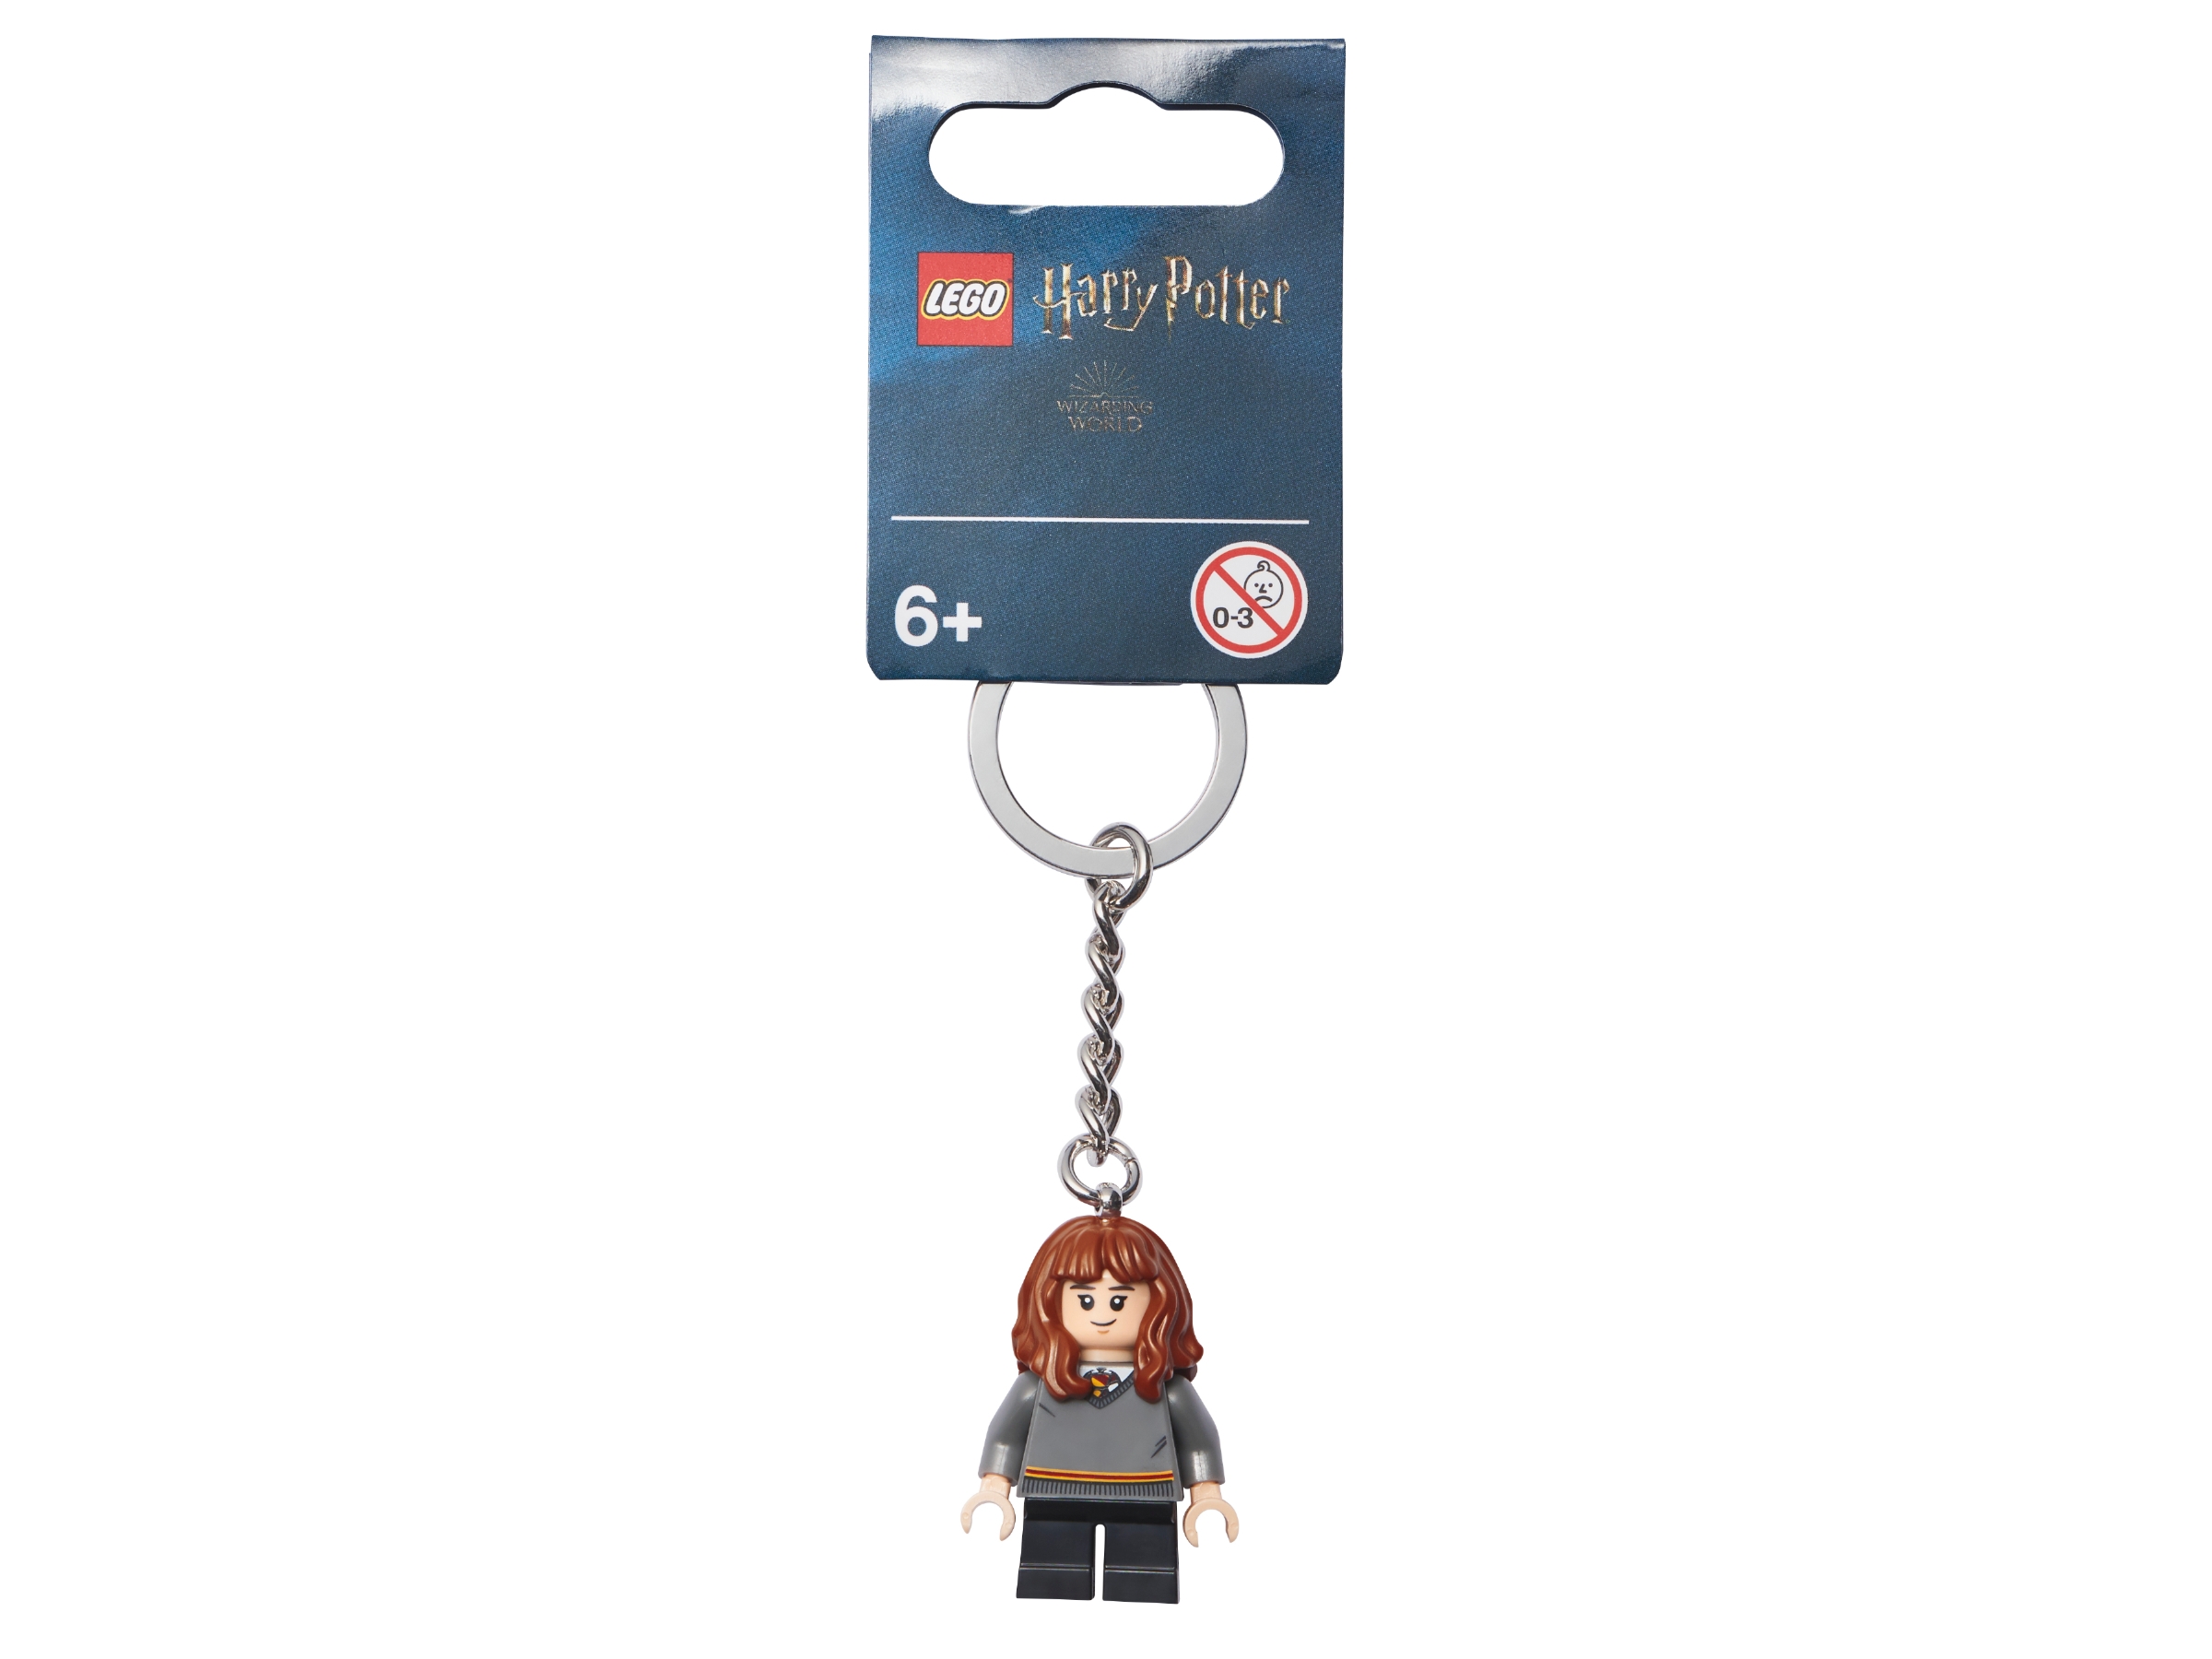 LEGO Harry Potter Hermione Granger Minifigure Keychain 854115 